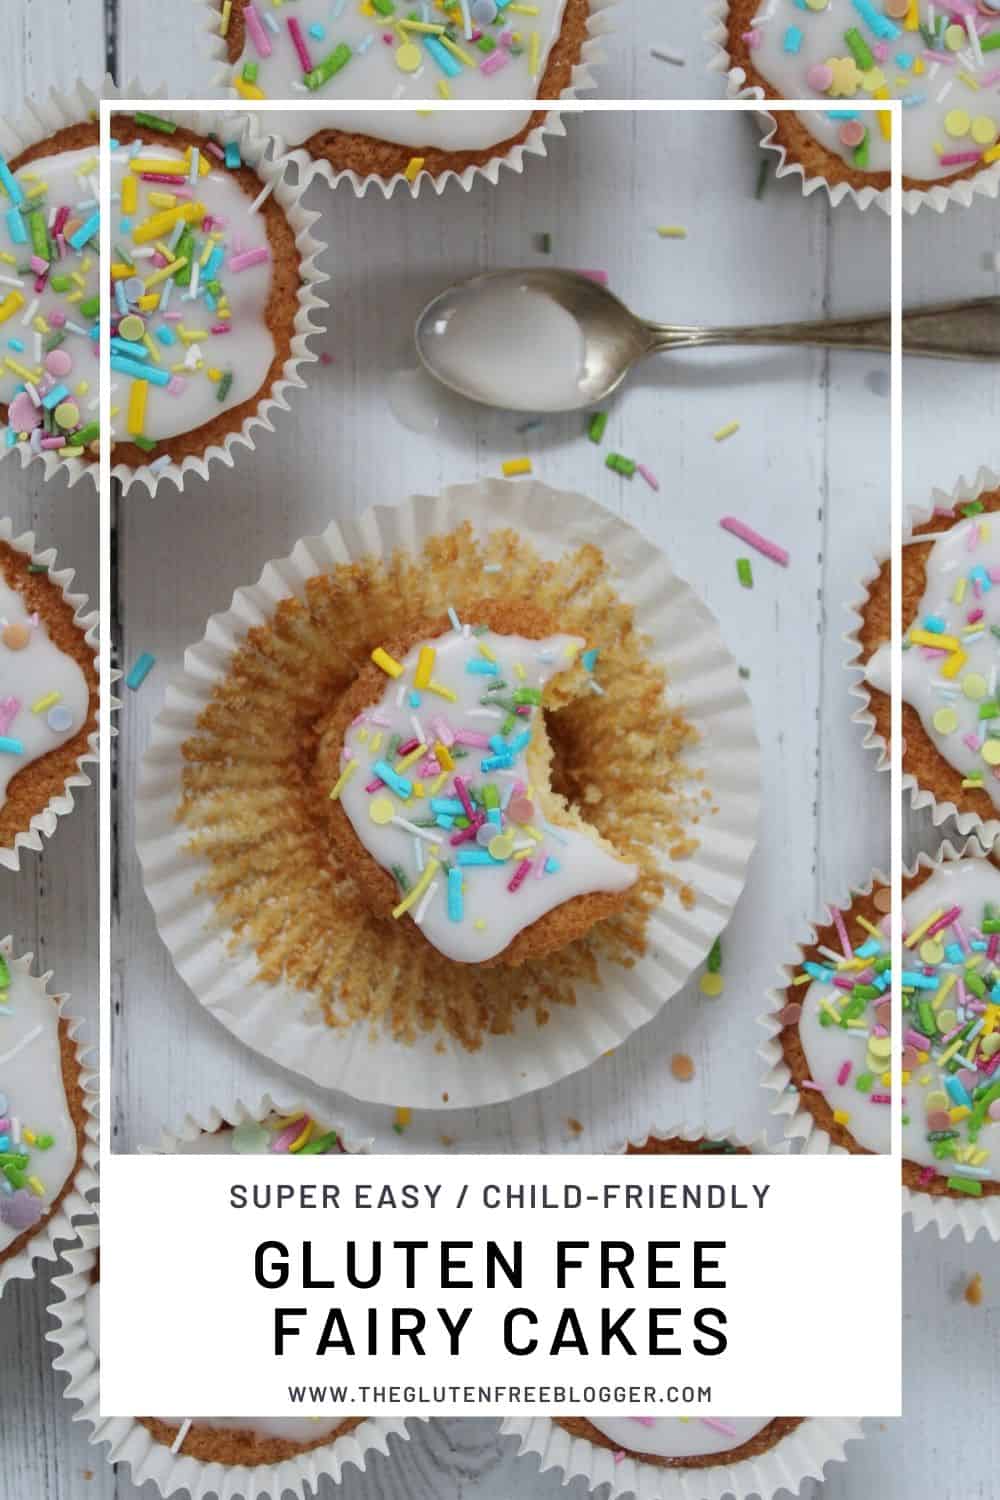 gluten free fairy cakes recipe easy baking child-friendly bake with children (1)